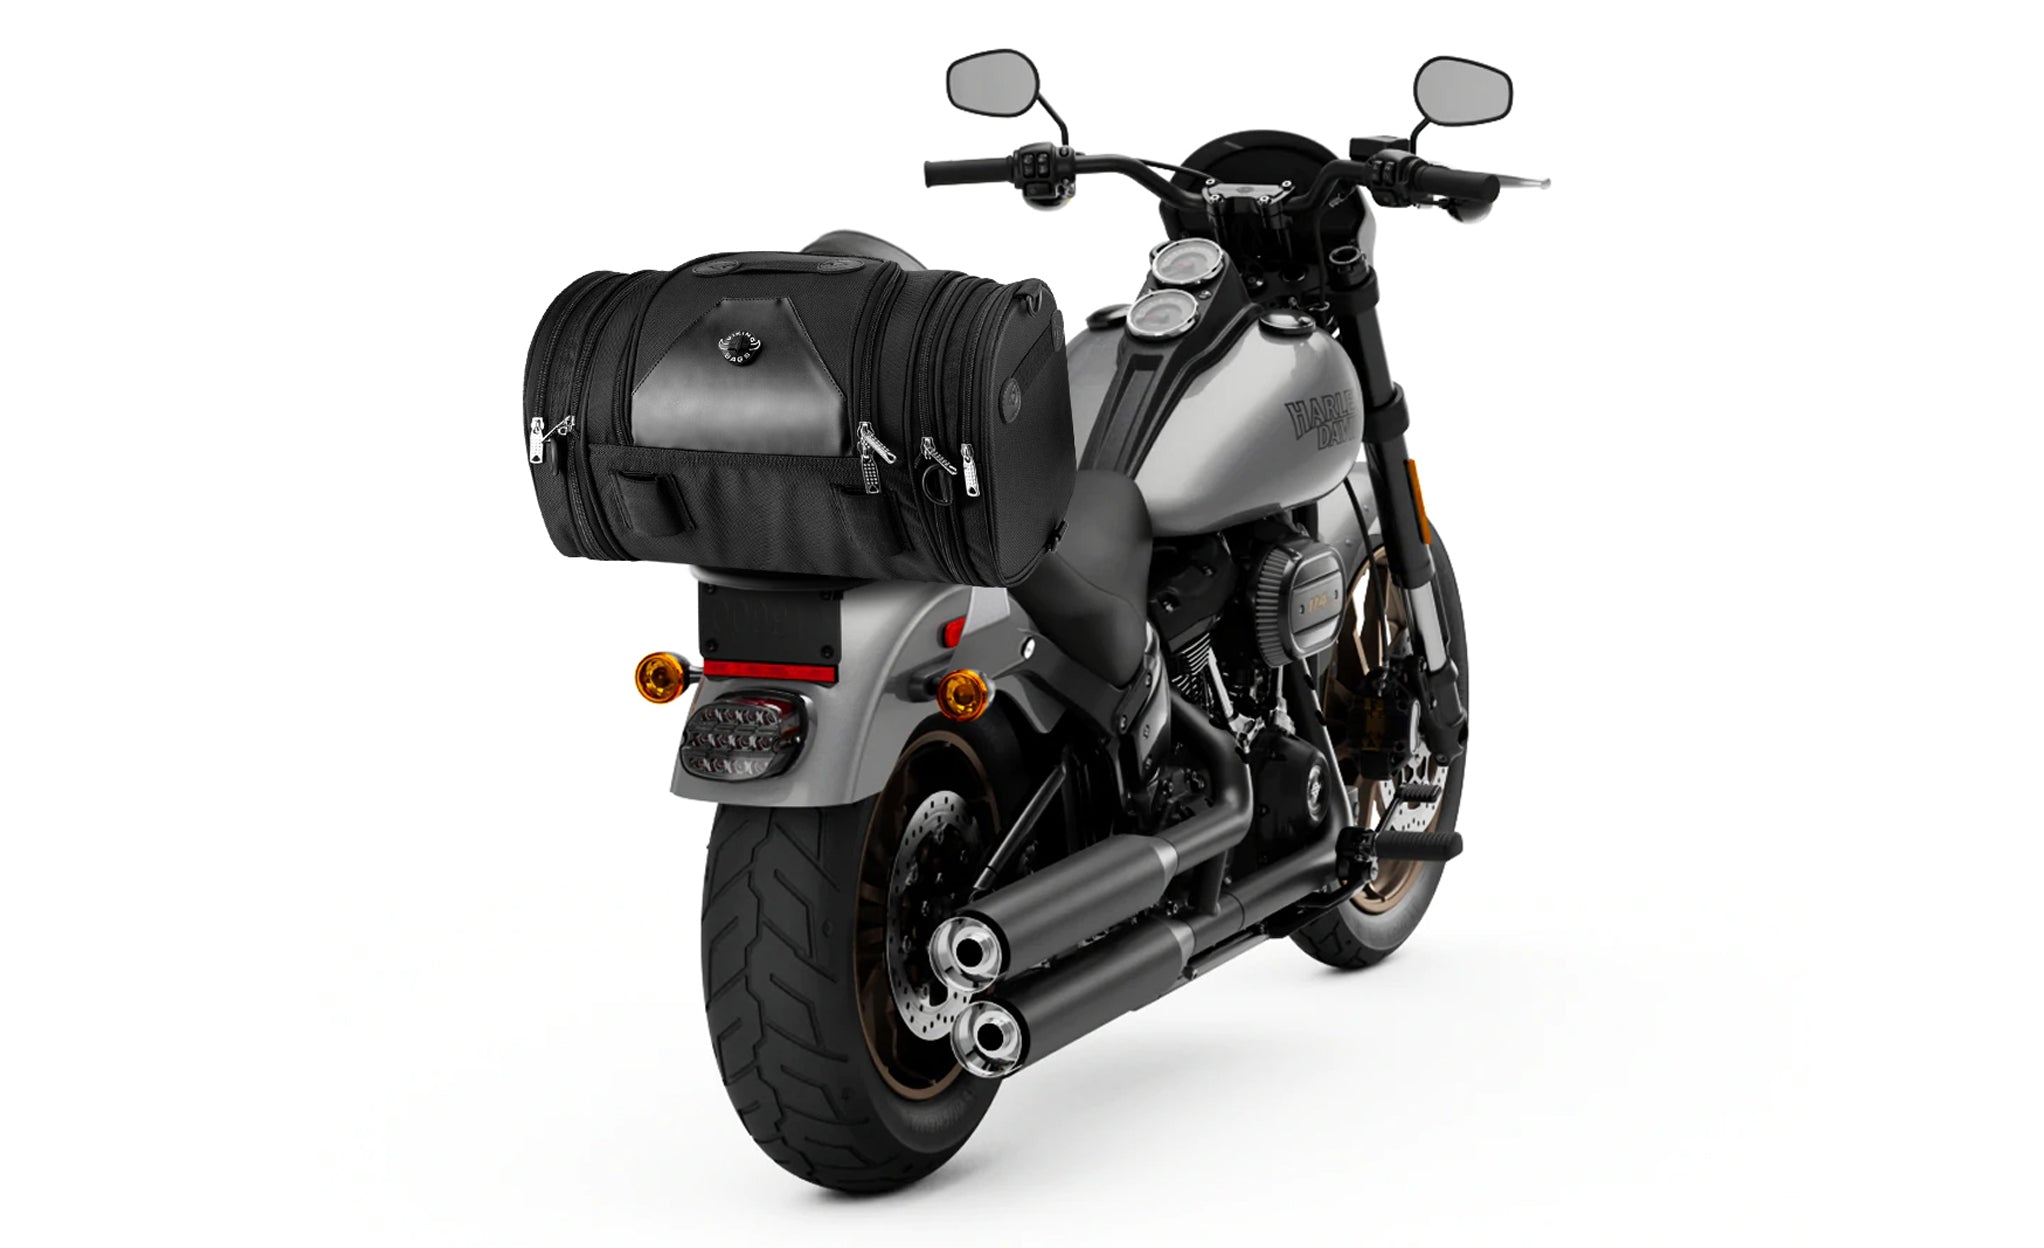 Viking Axwell Small Honda Motorcycle Roll Bag Bag on Bike View @expand